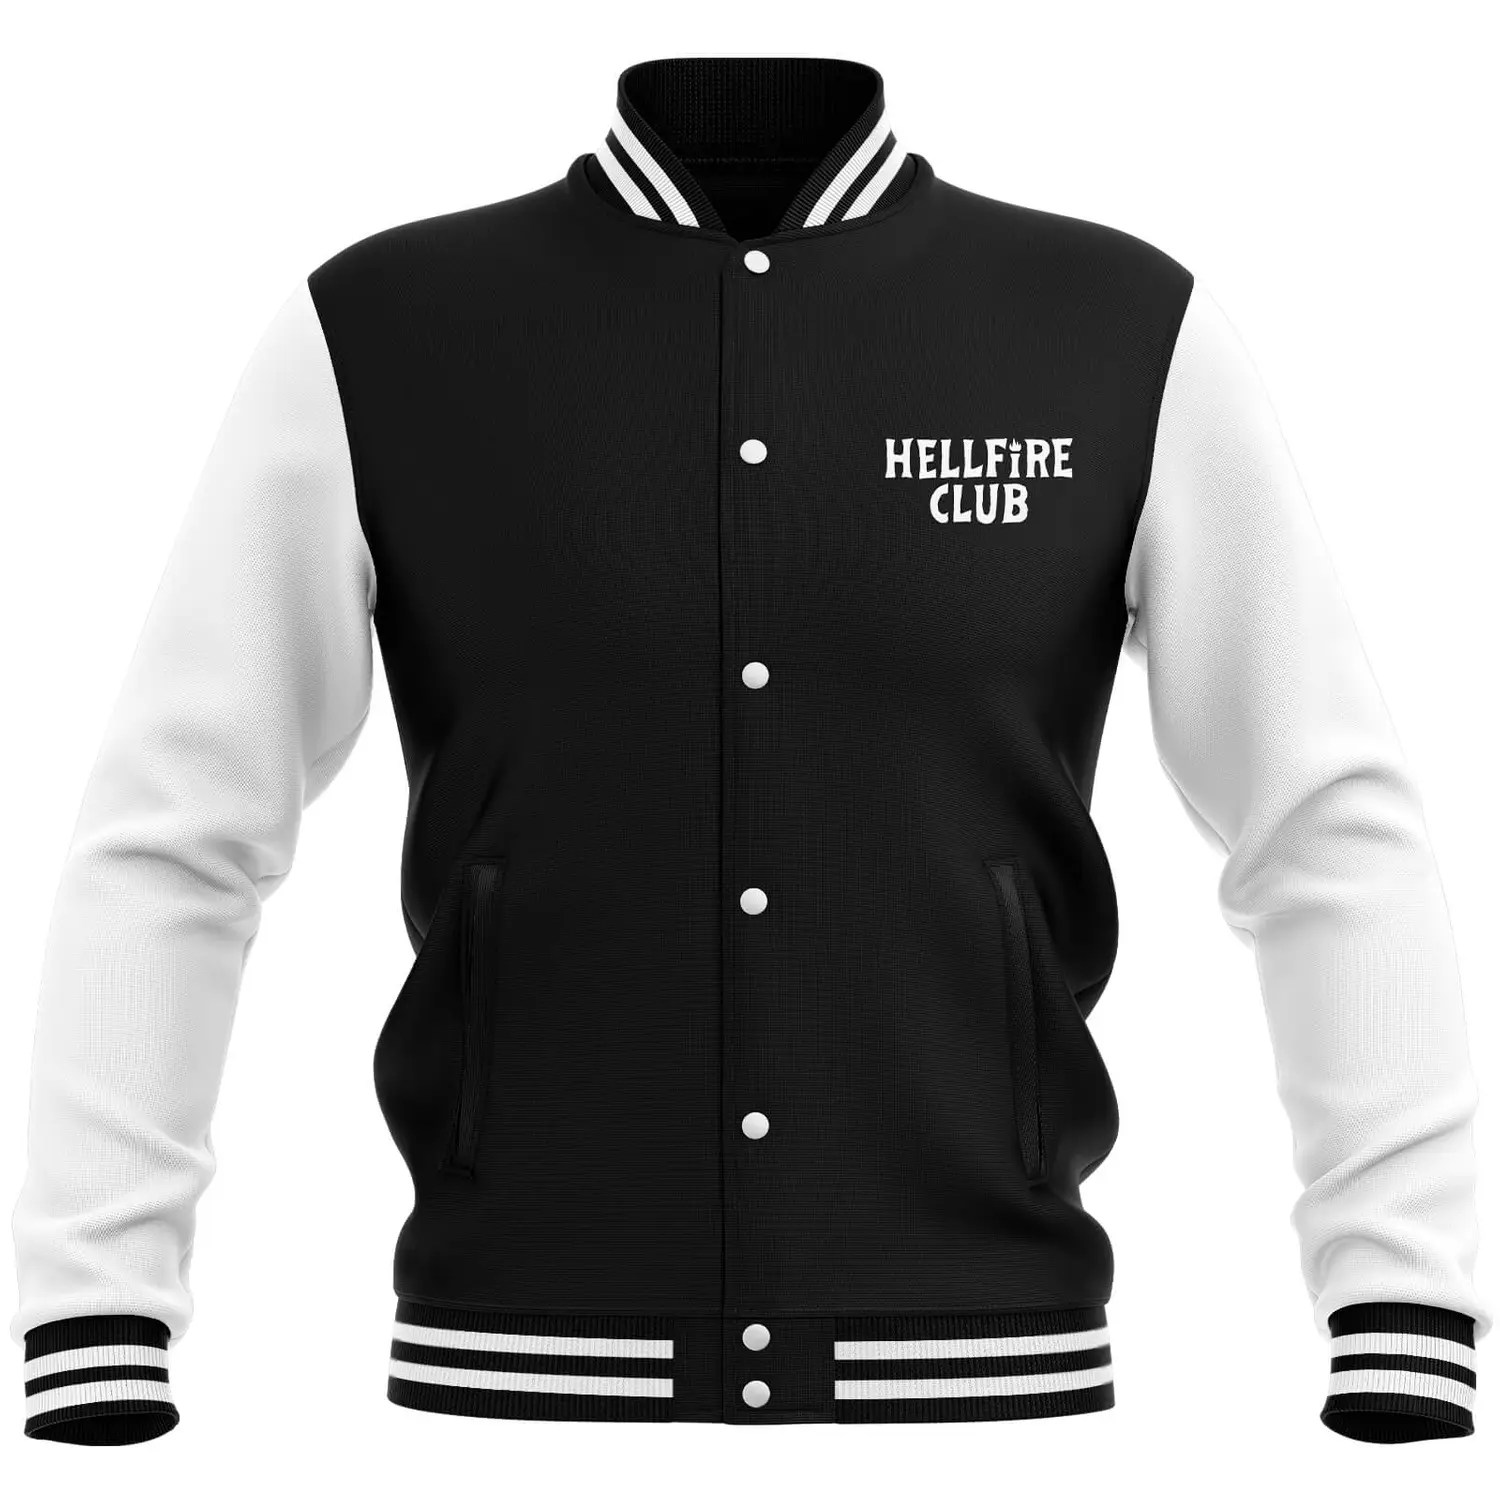 A Stranger Things Hellfire Club varsity jacket.